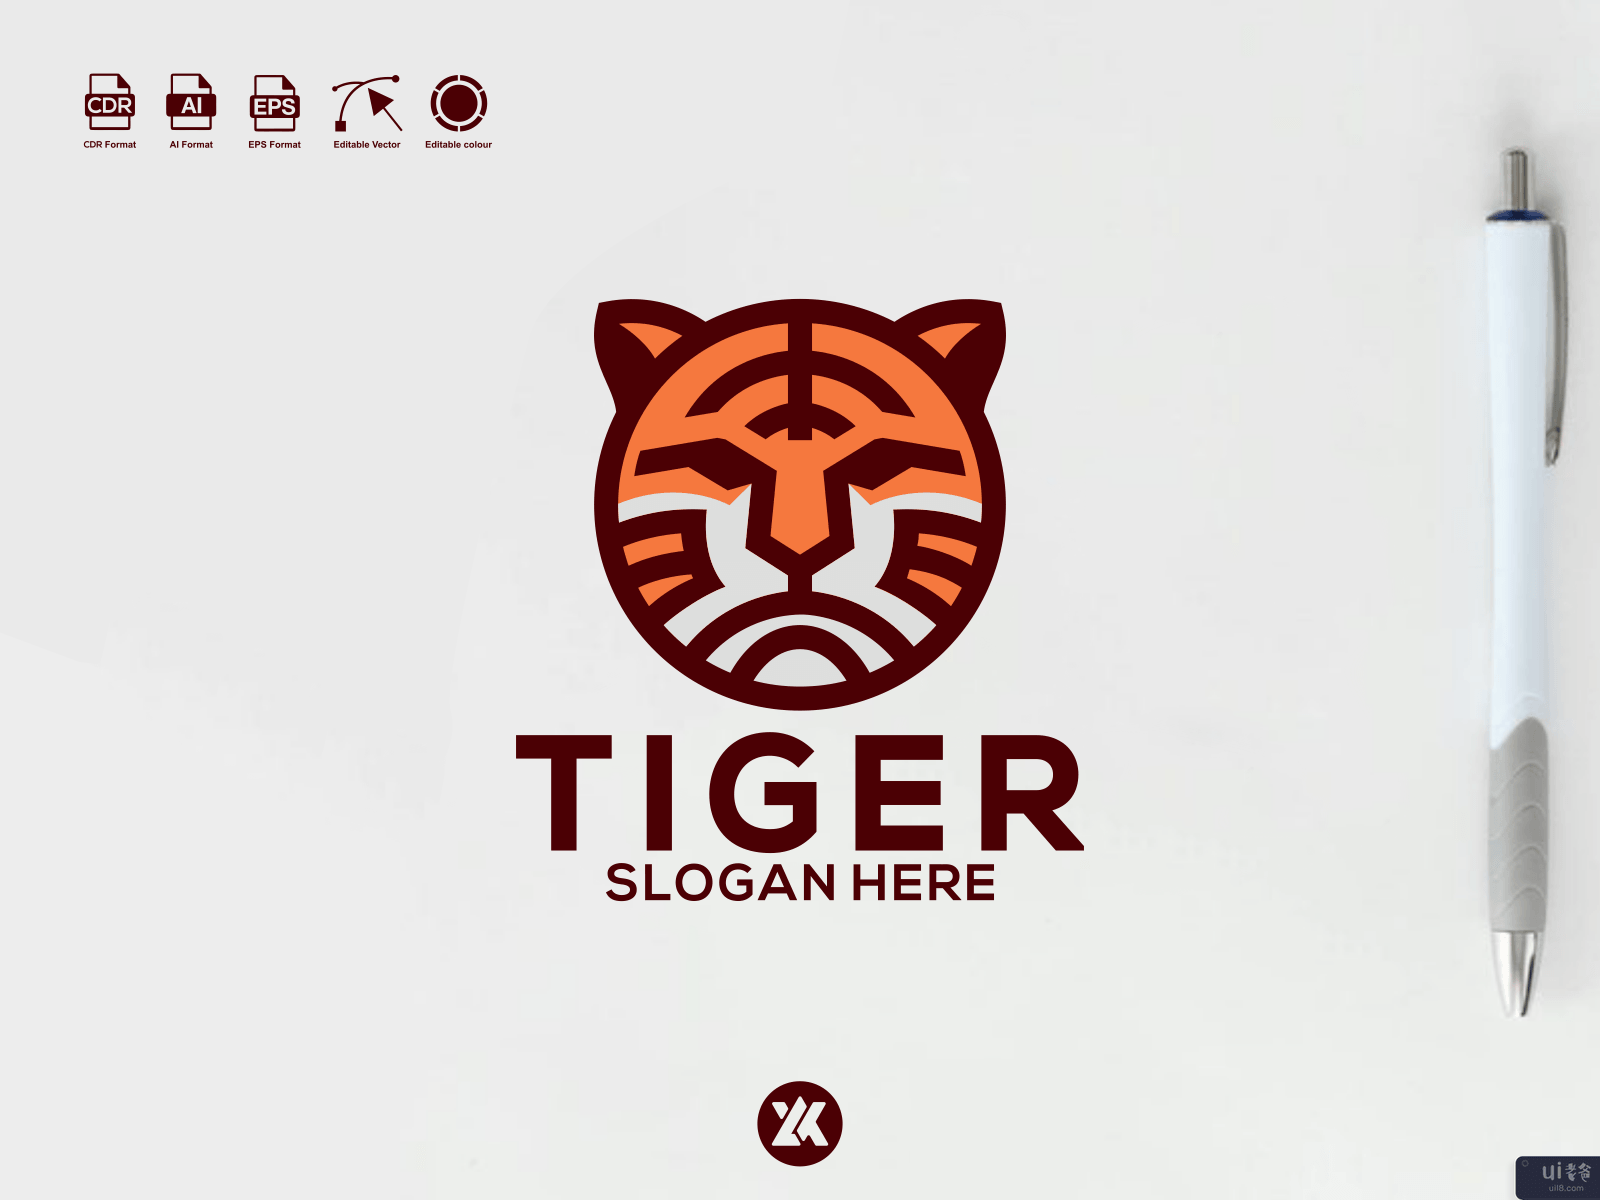 老虎标志(Tiger logo)插图